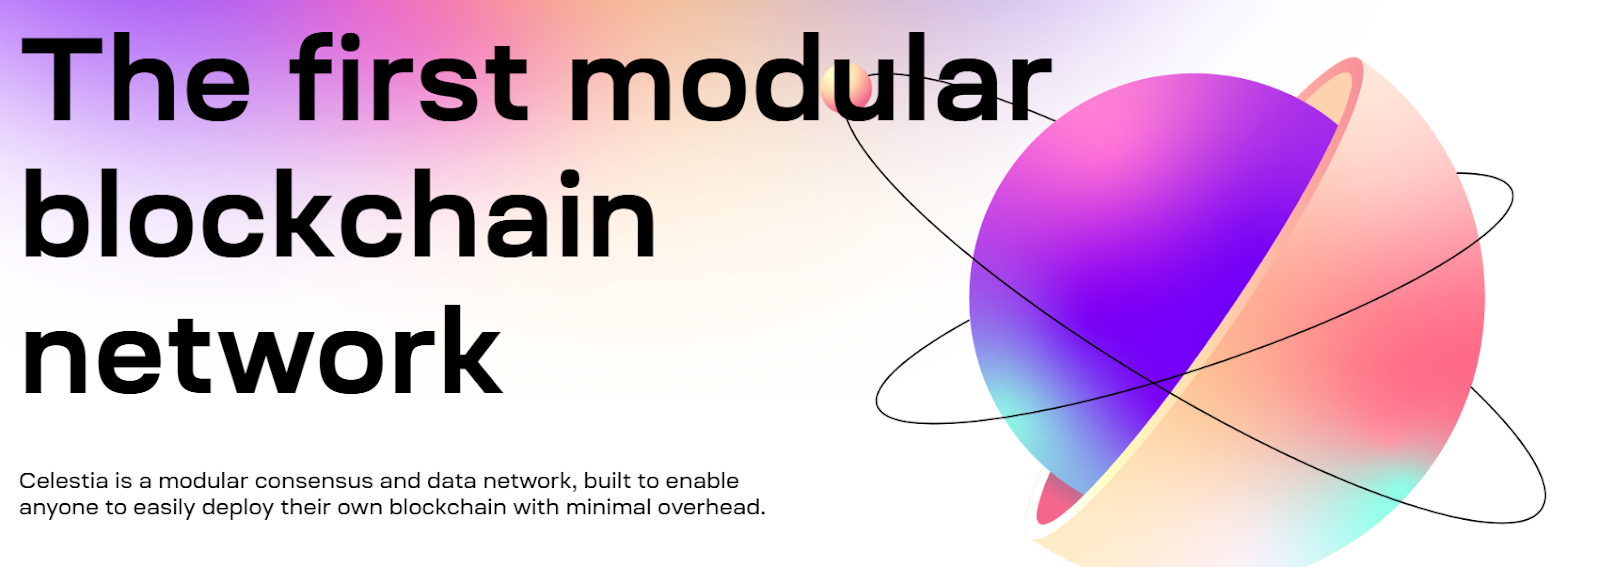 Celestia modular blockchain network